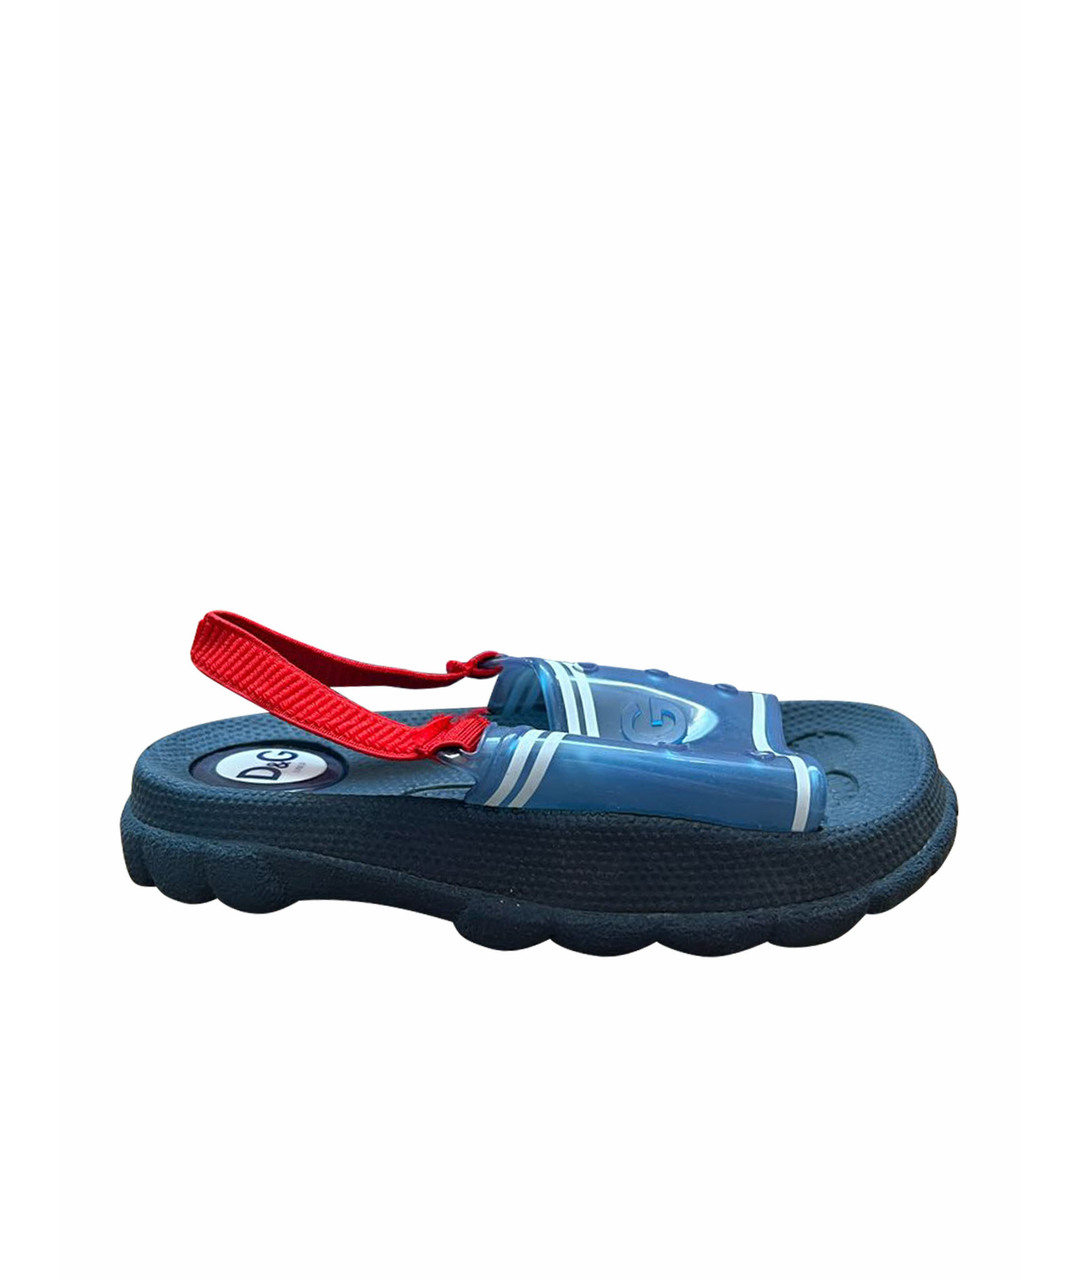 DOLCE & GABBANA KIDS Темно-синие резиновые сандалии и шлепанцы, фото 1